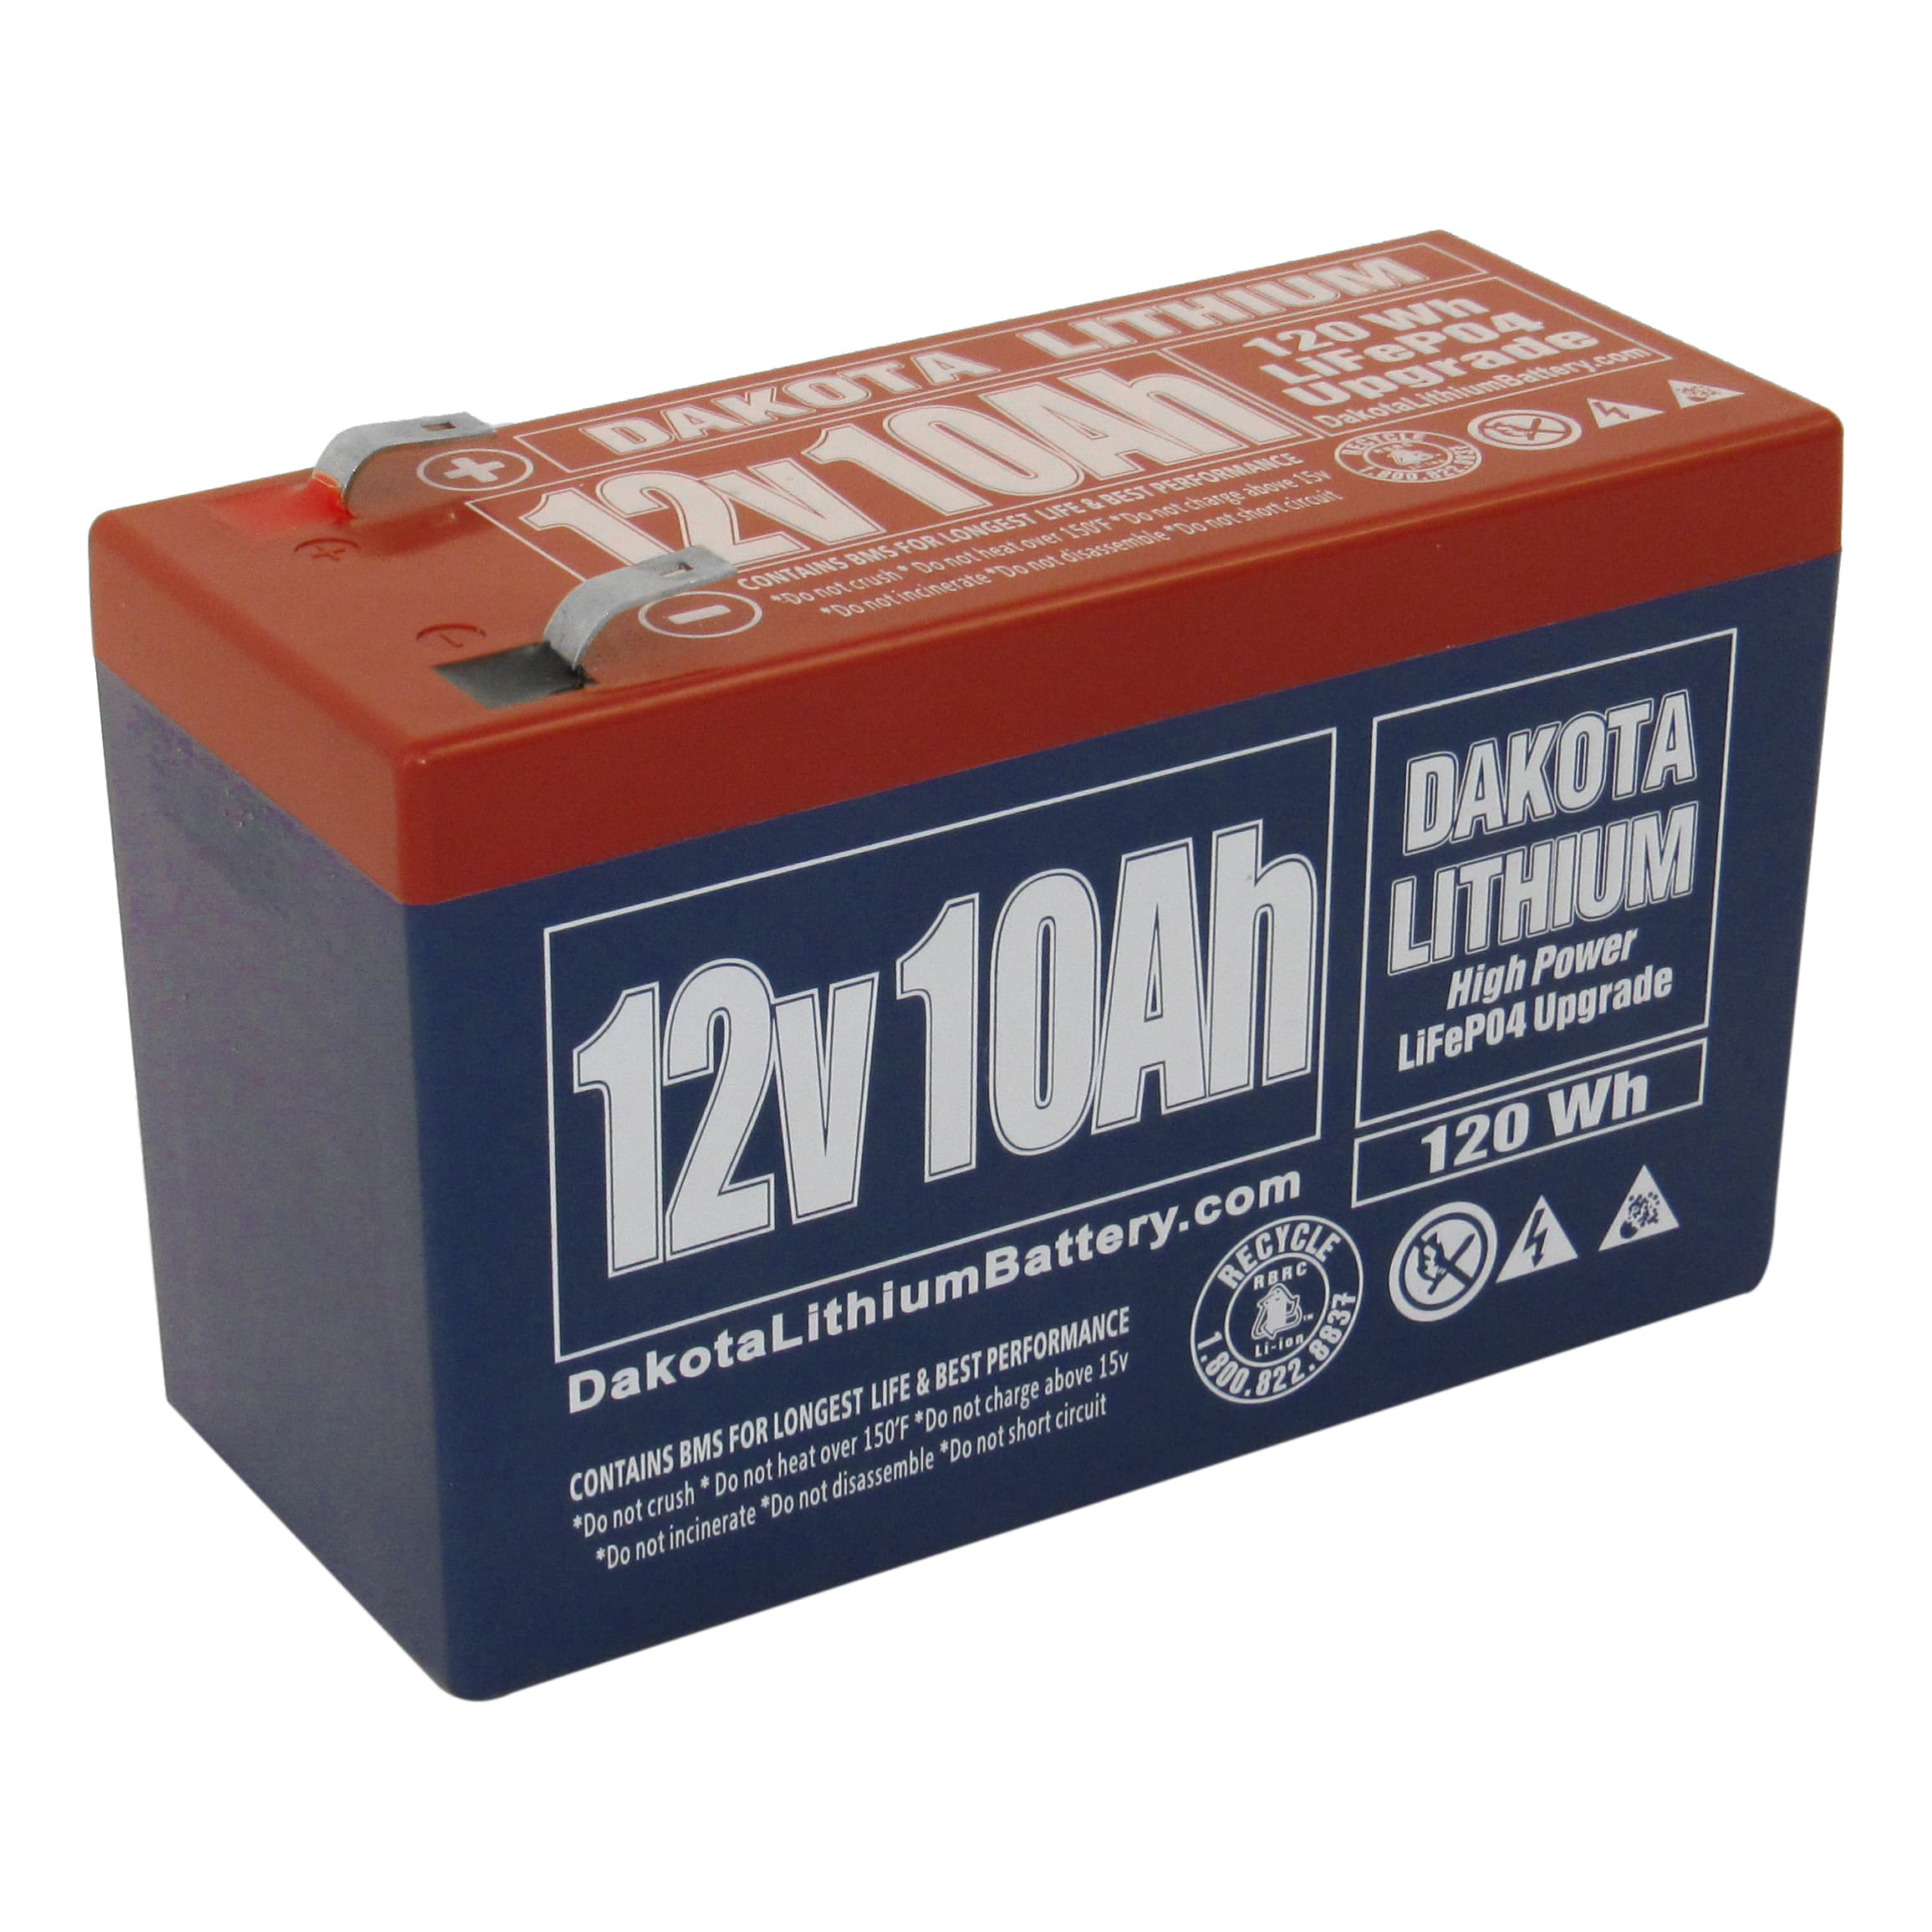 Dakota Lithium 12V 10A Battery Charger